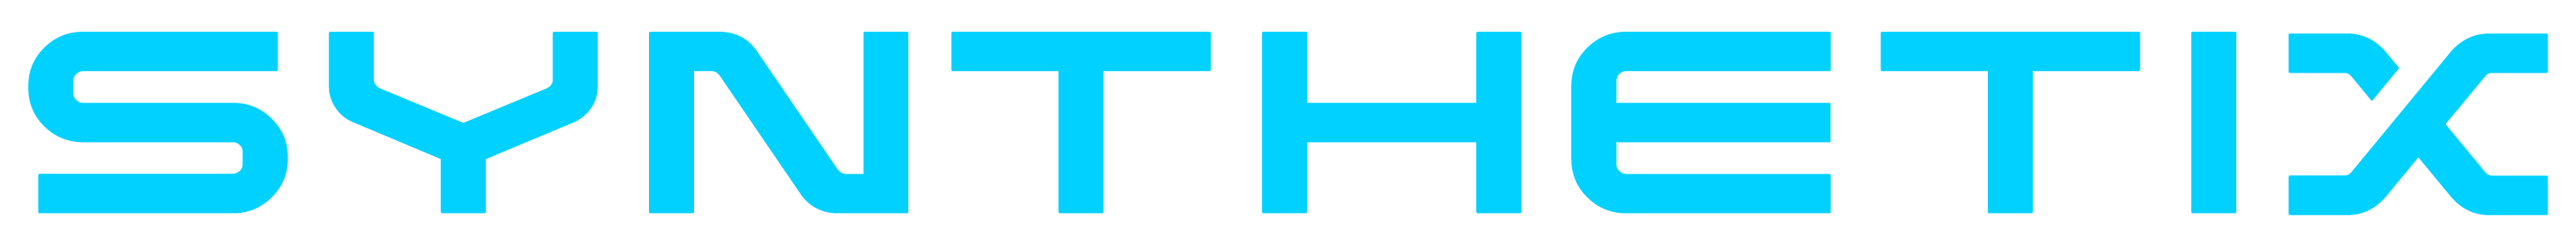 Synthetix logo colors